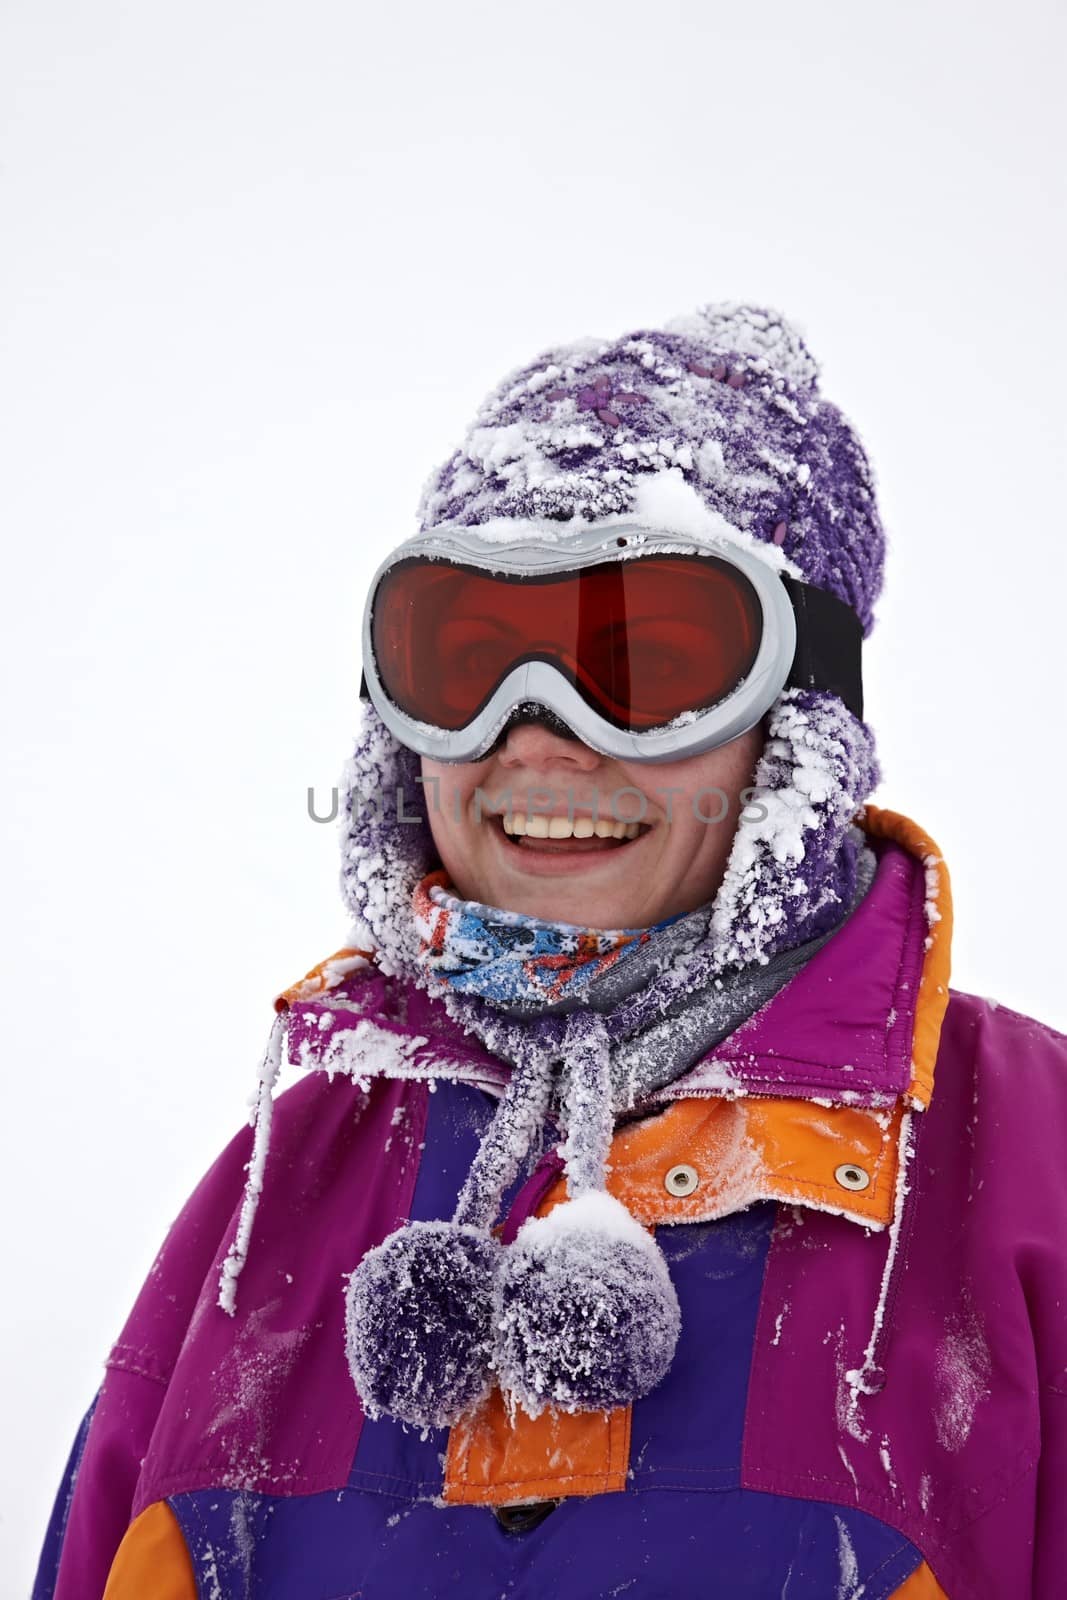 Skier Portrait by Gudella